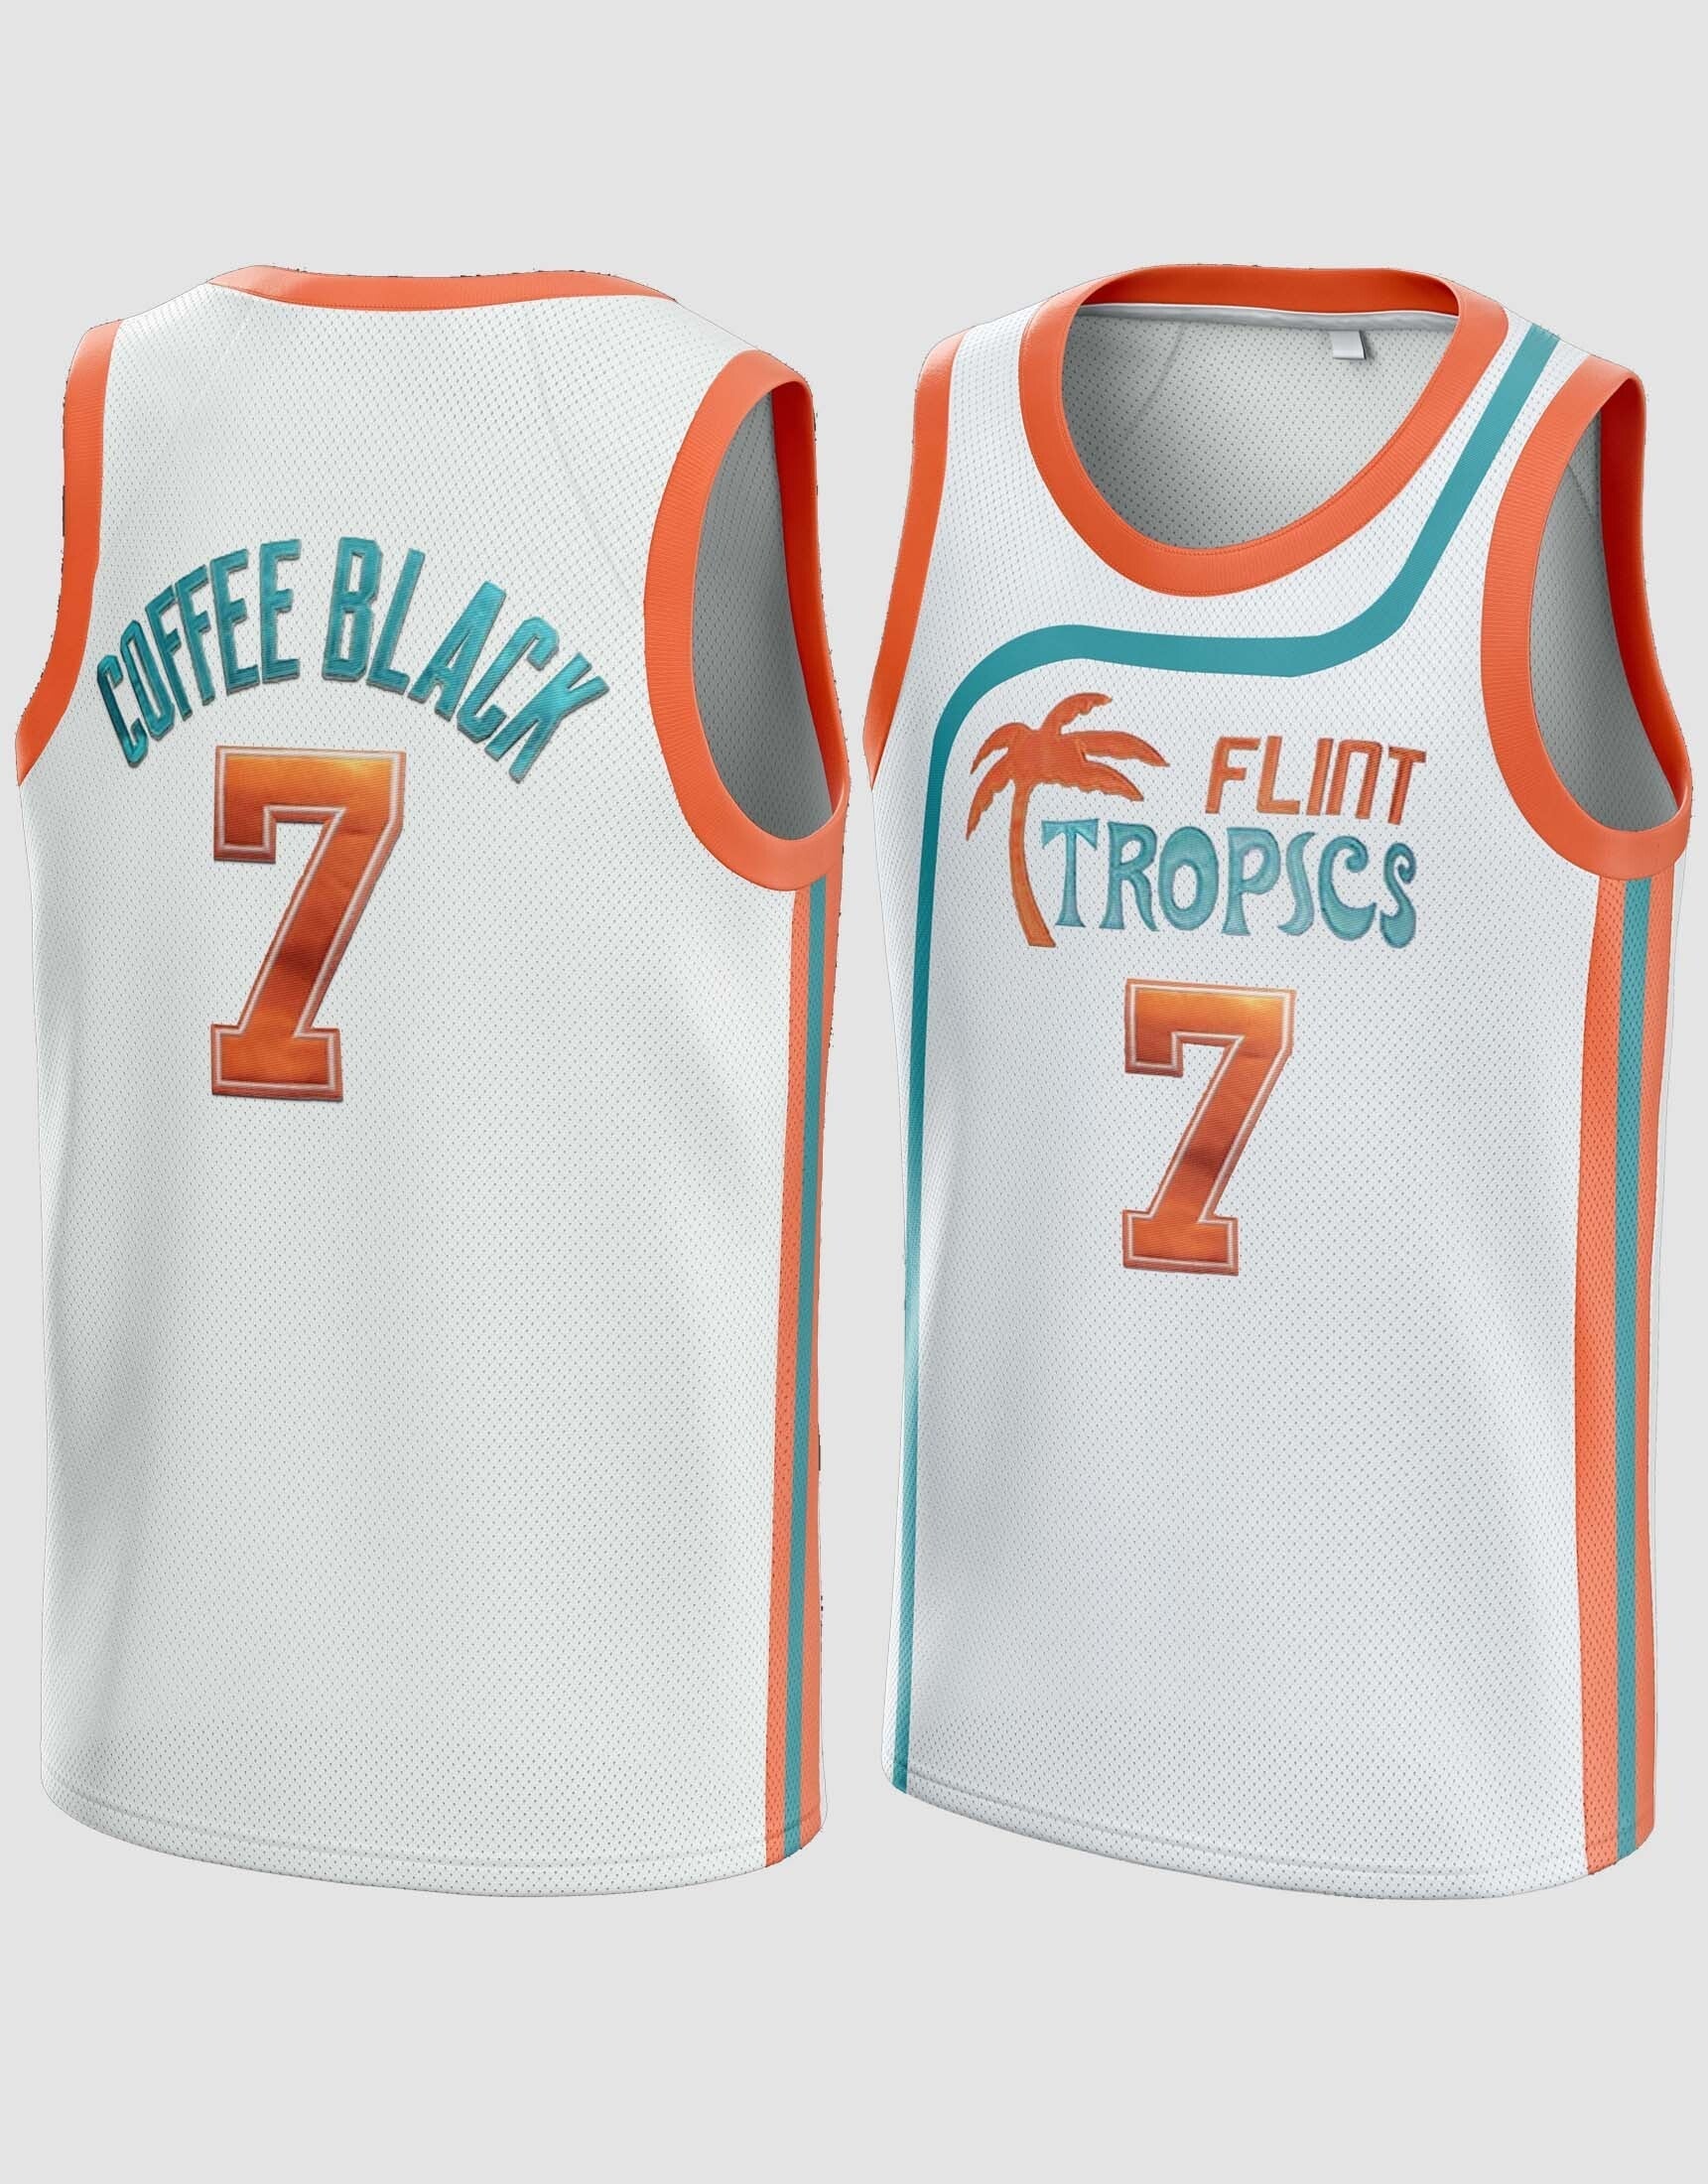 AFLGO Coffee Black #7 Flint Tropics Semi-Pro Movie 90SStitched Basketball Jersey 